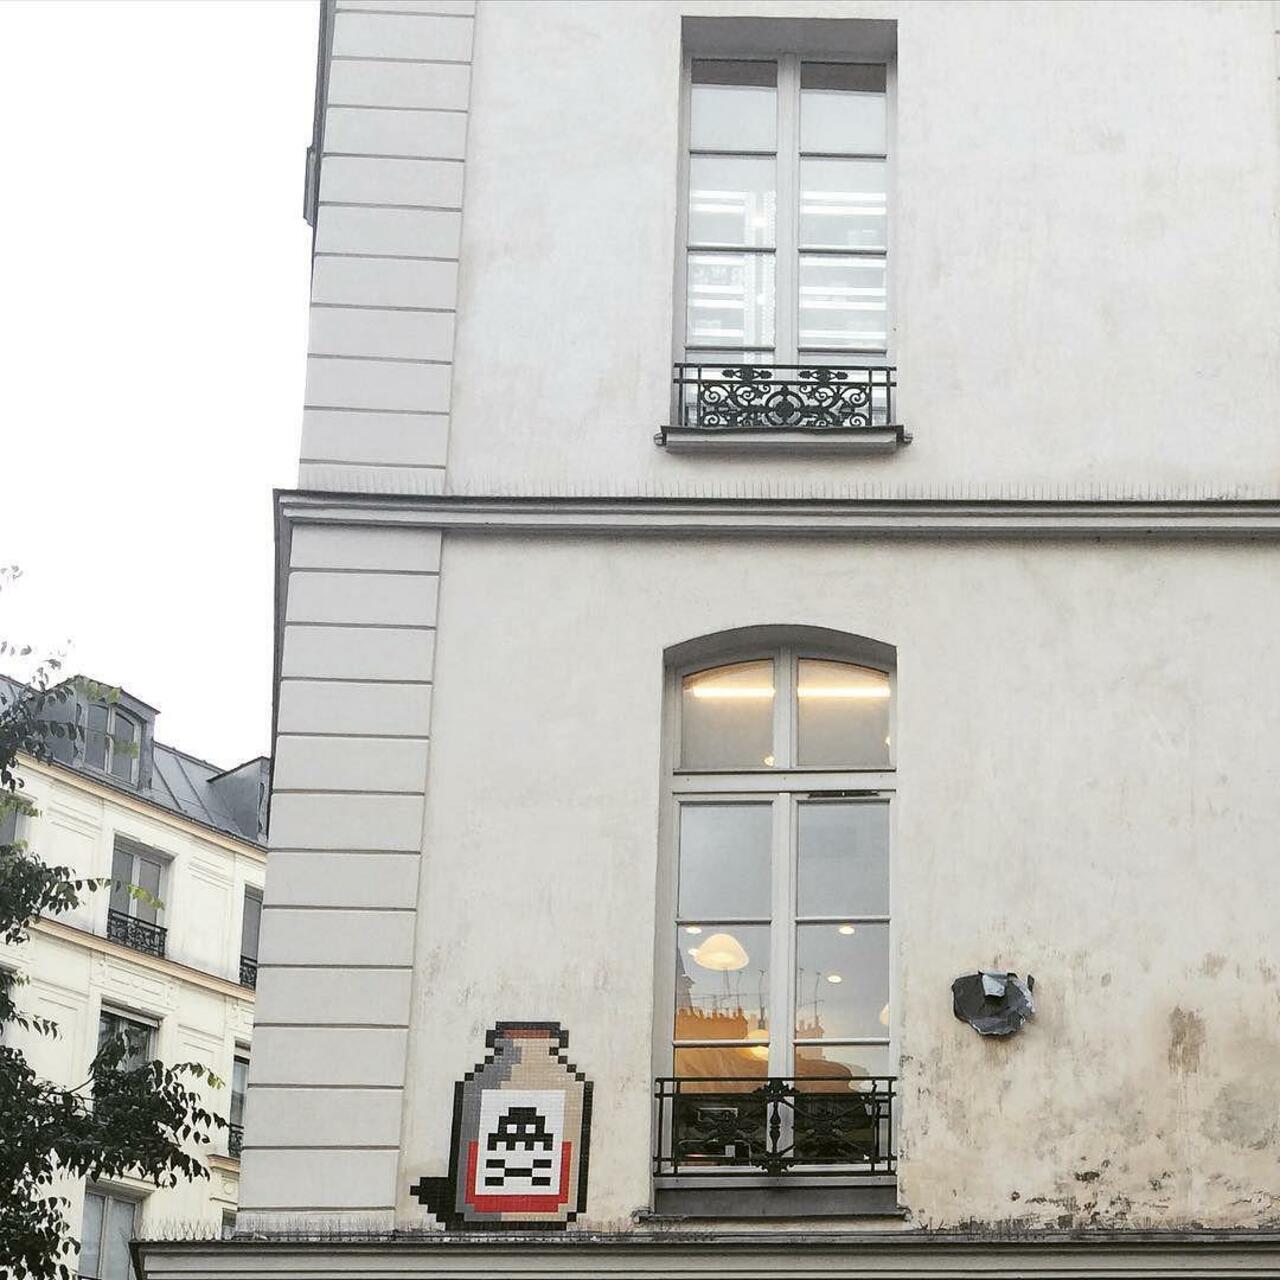 #Paris #graffiti photo by @julienvermeulen http://ift.tt/1Qpq9AX #StreetArt http://t.co/lXNyQAniWN